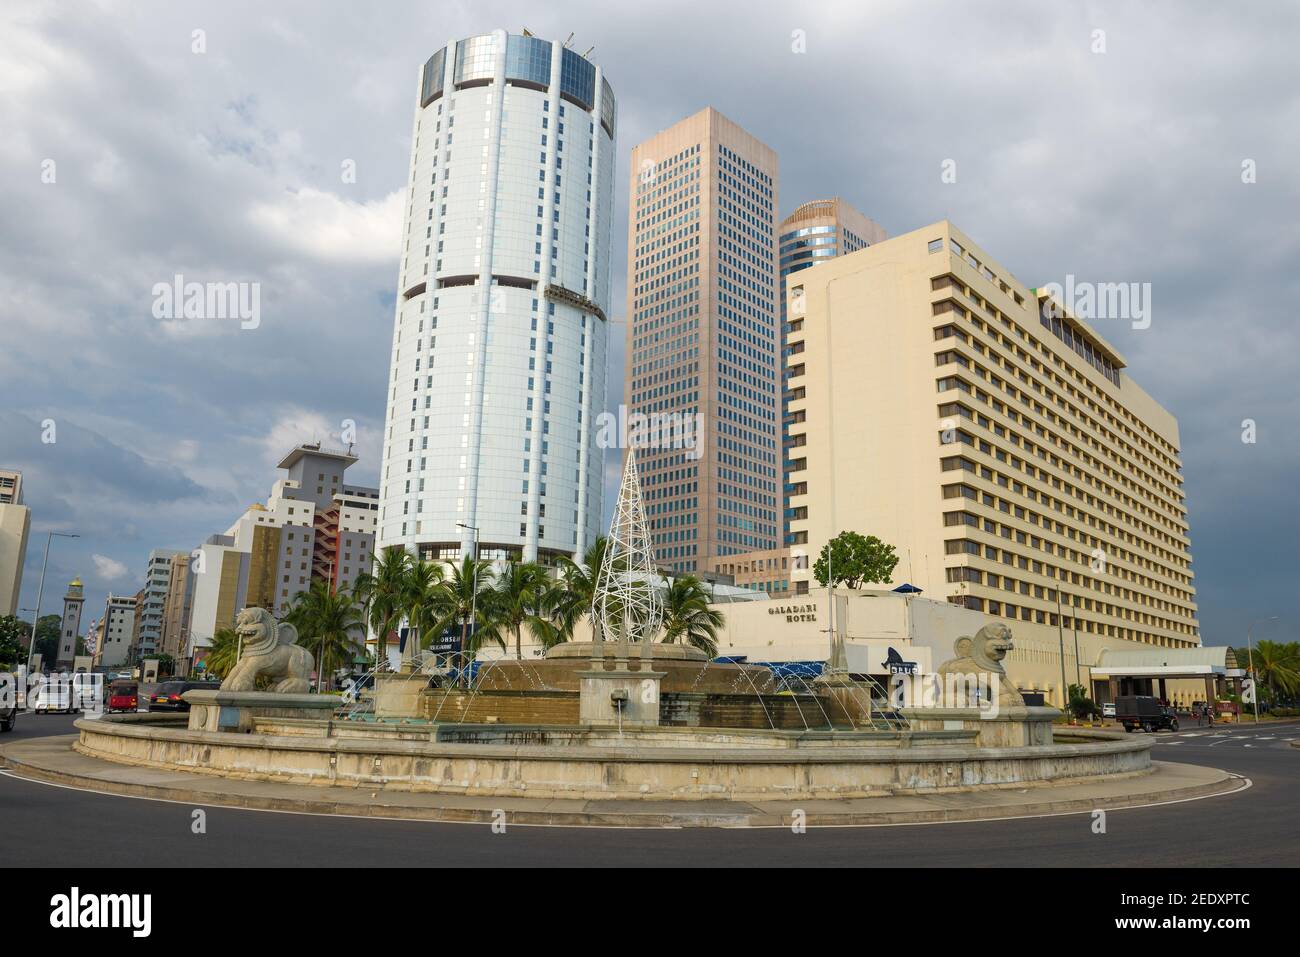 COLOMBO, SRI LANKA - 21. FEBRUAR 2020: Stadtbrunnen-Denkmal vor dem Hintergrund moderner Gebäude an einem bewölkten Tag Stockfoto